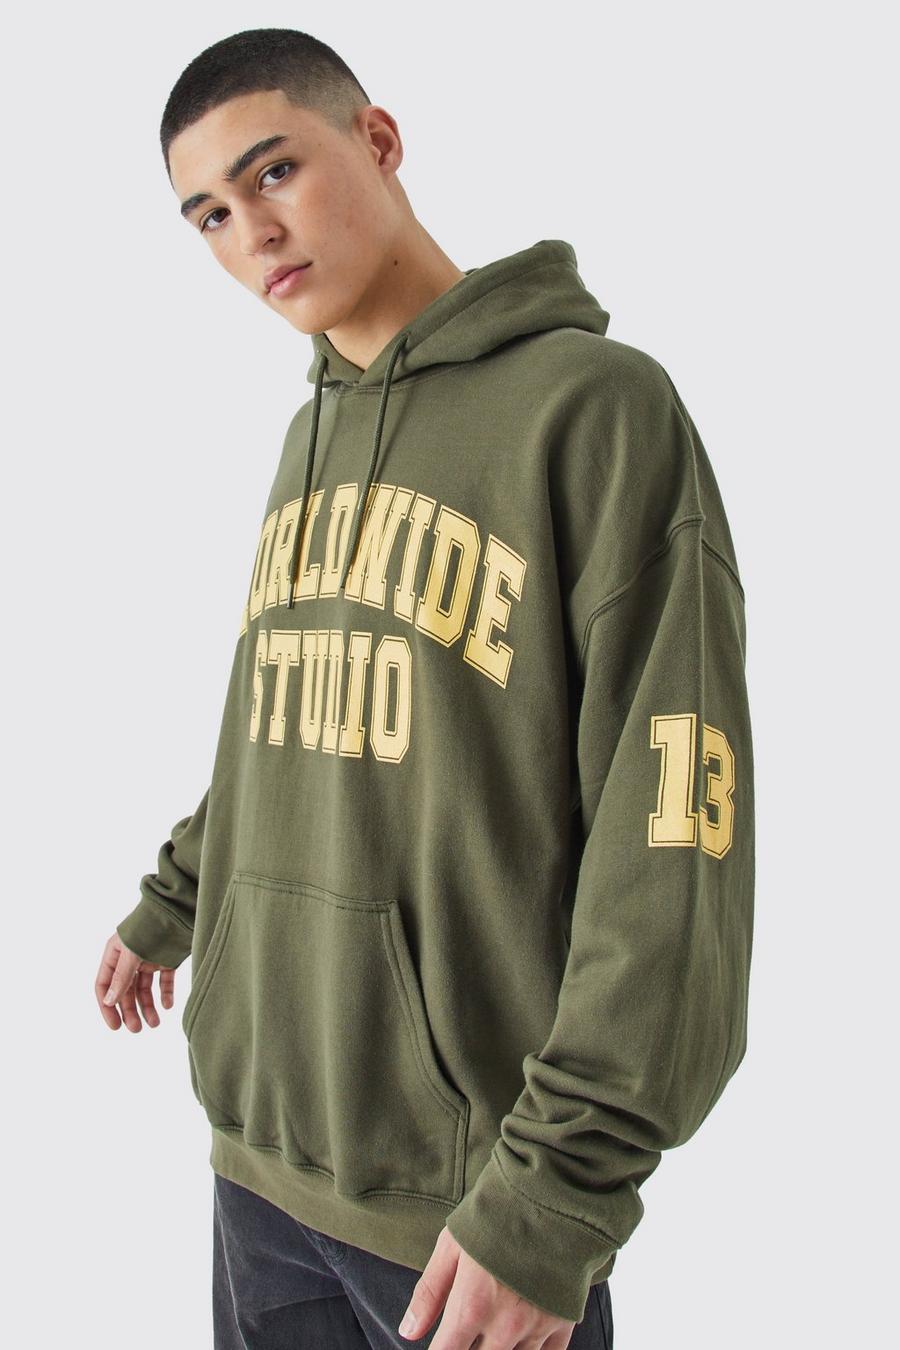 Green Worldwide Oversize Urblekt hoodie